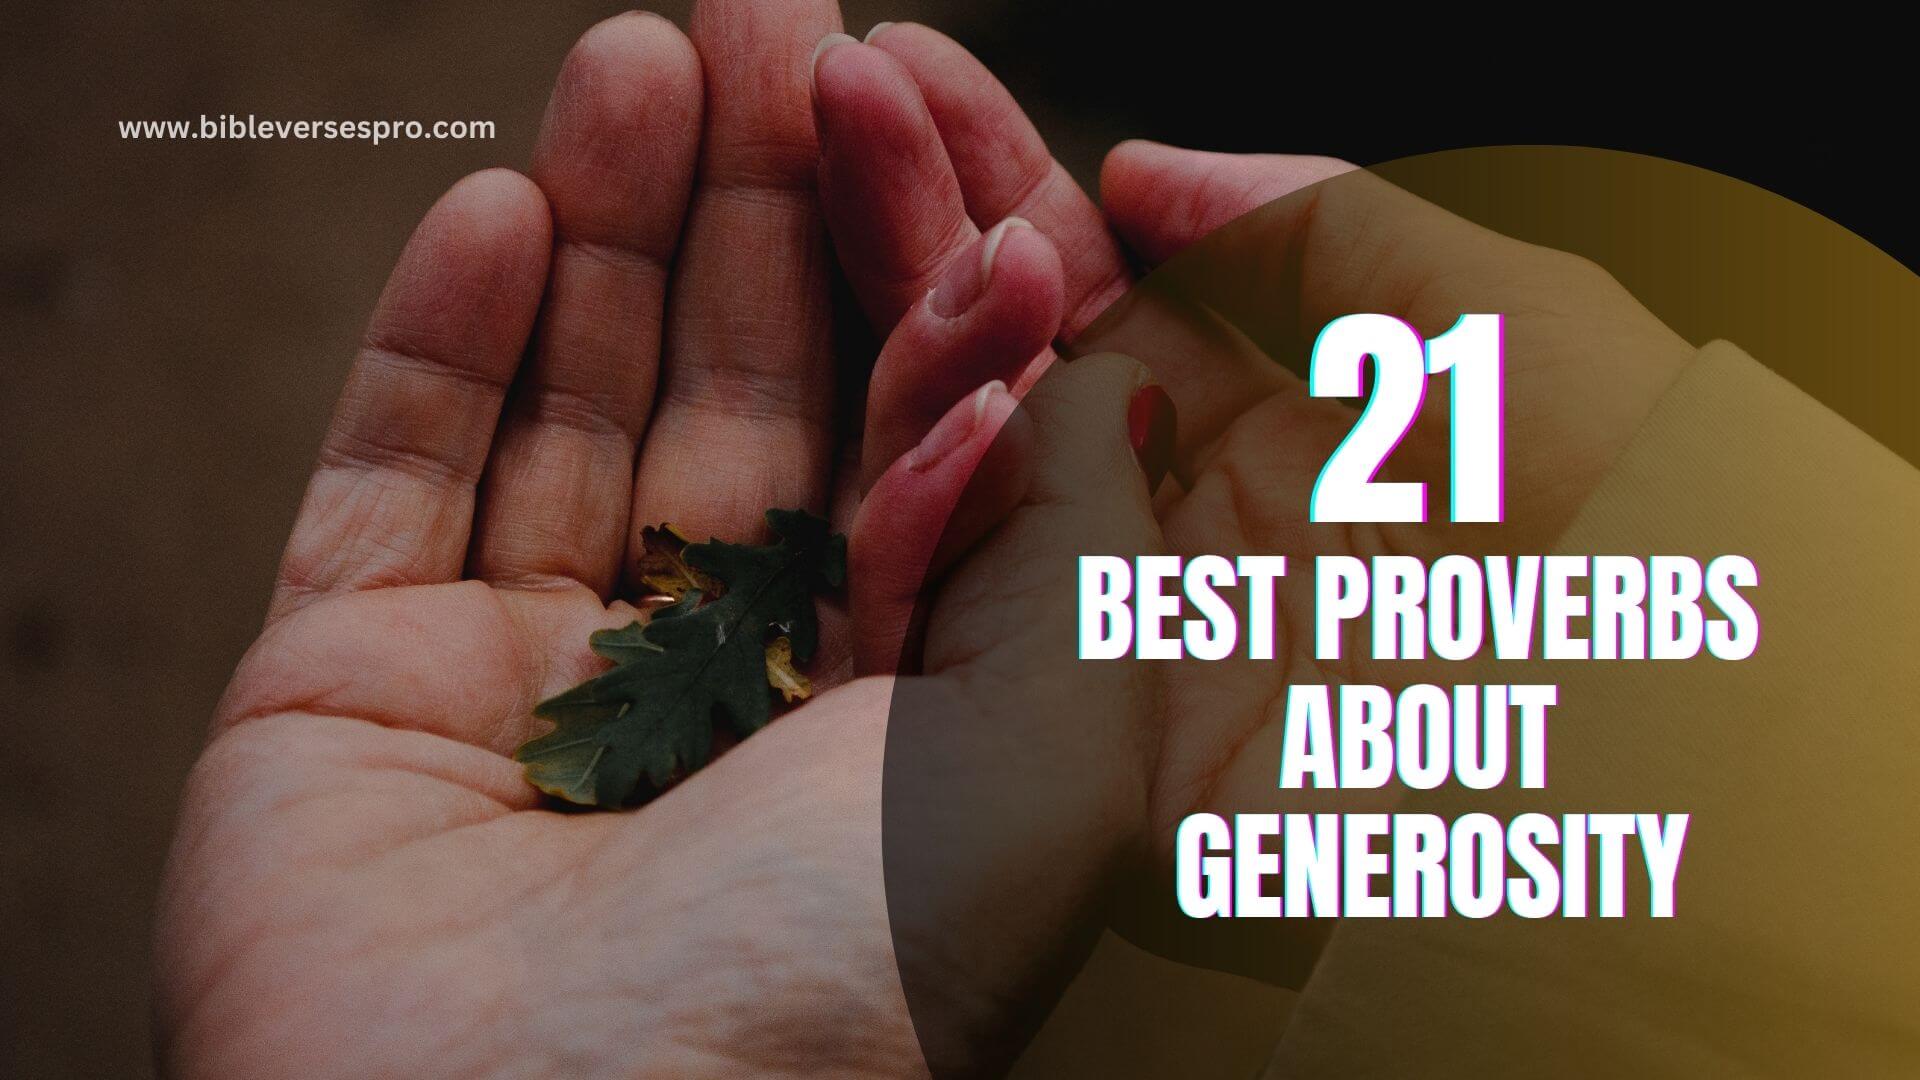 BEST PROVERBS ABOUT GENEROSITY